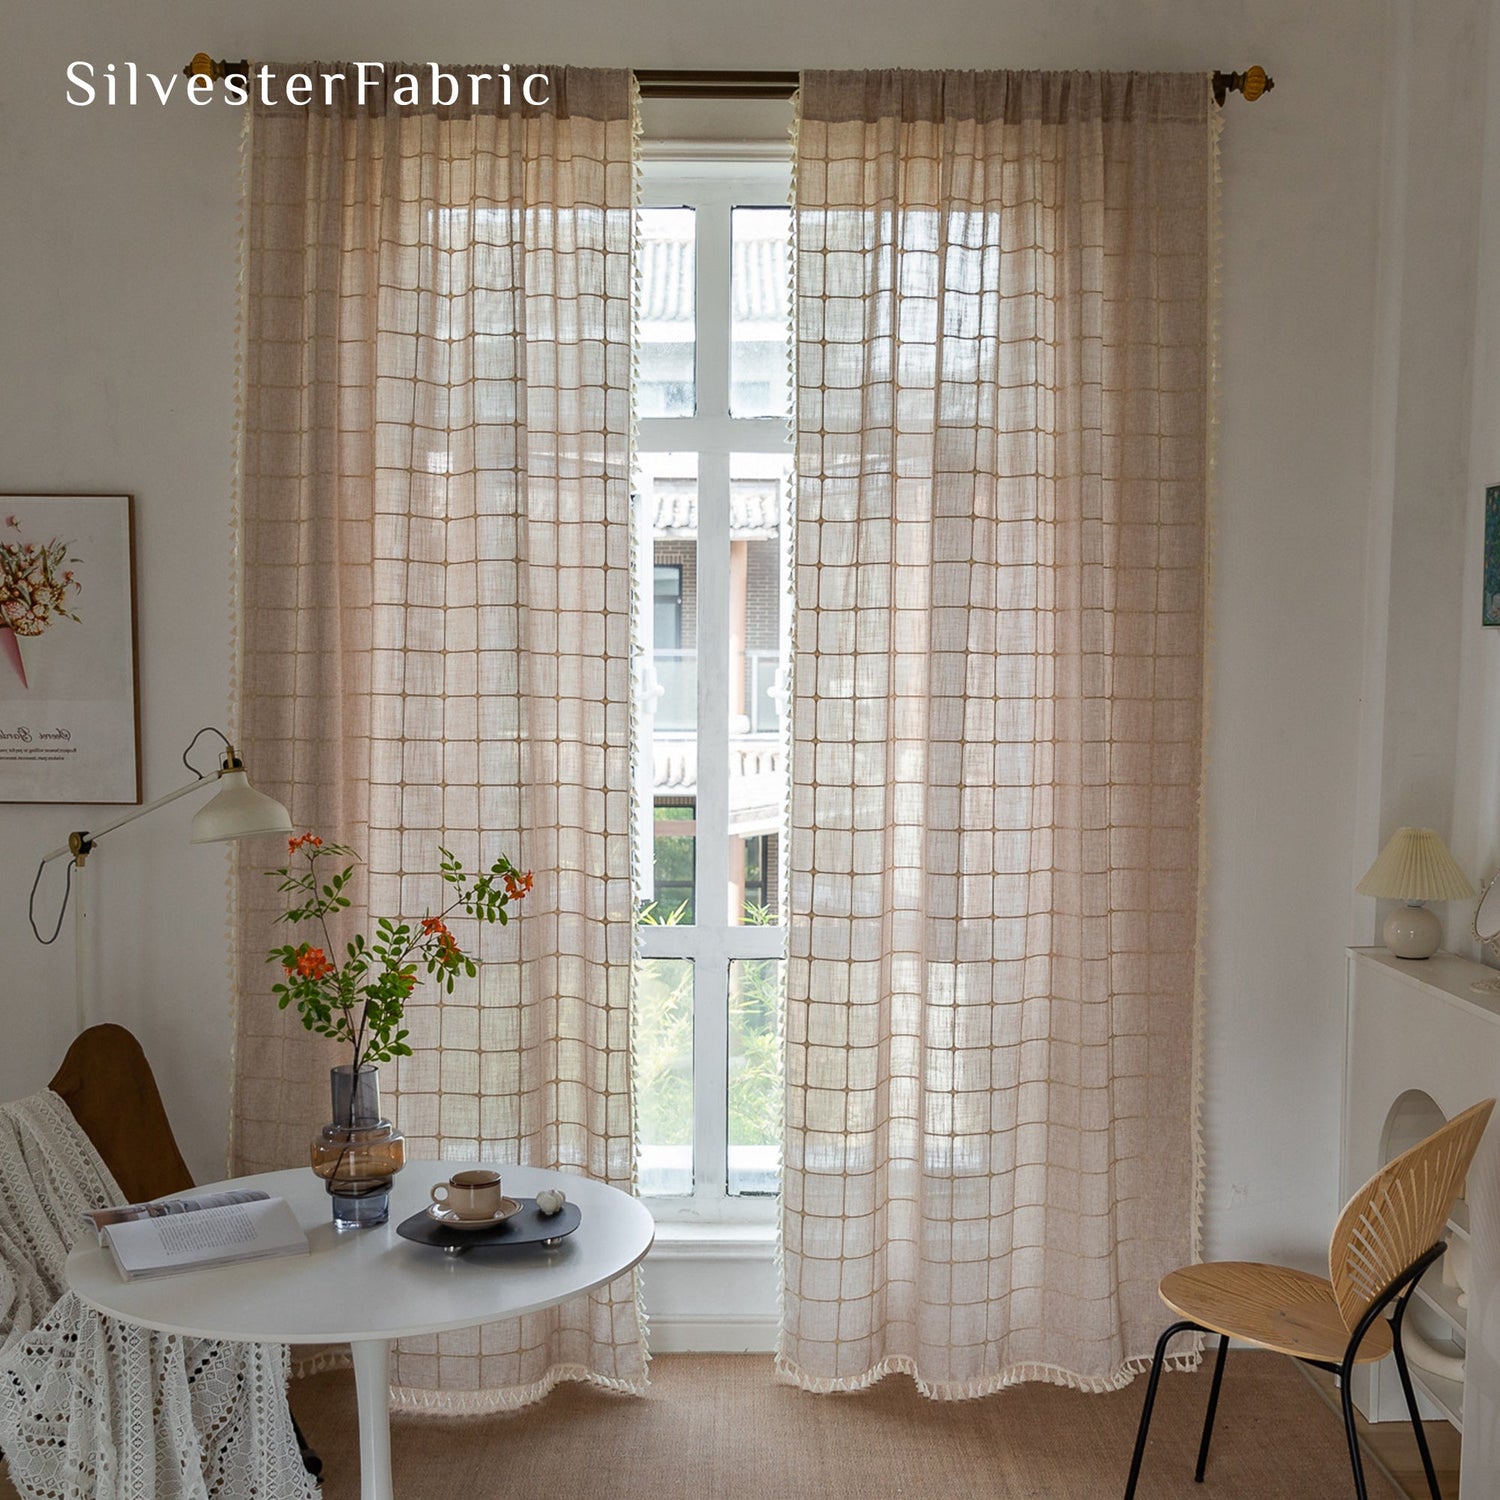 Curtains丨Living Room Curtains, Bathroom Curtains